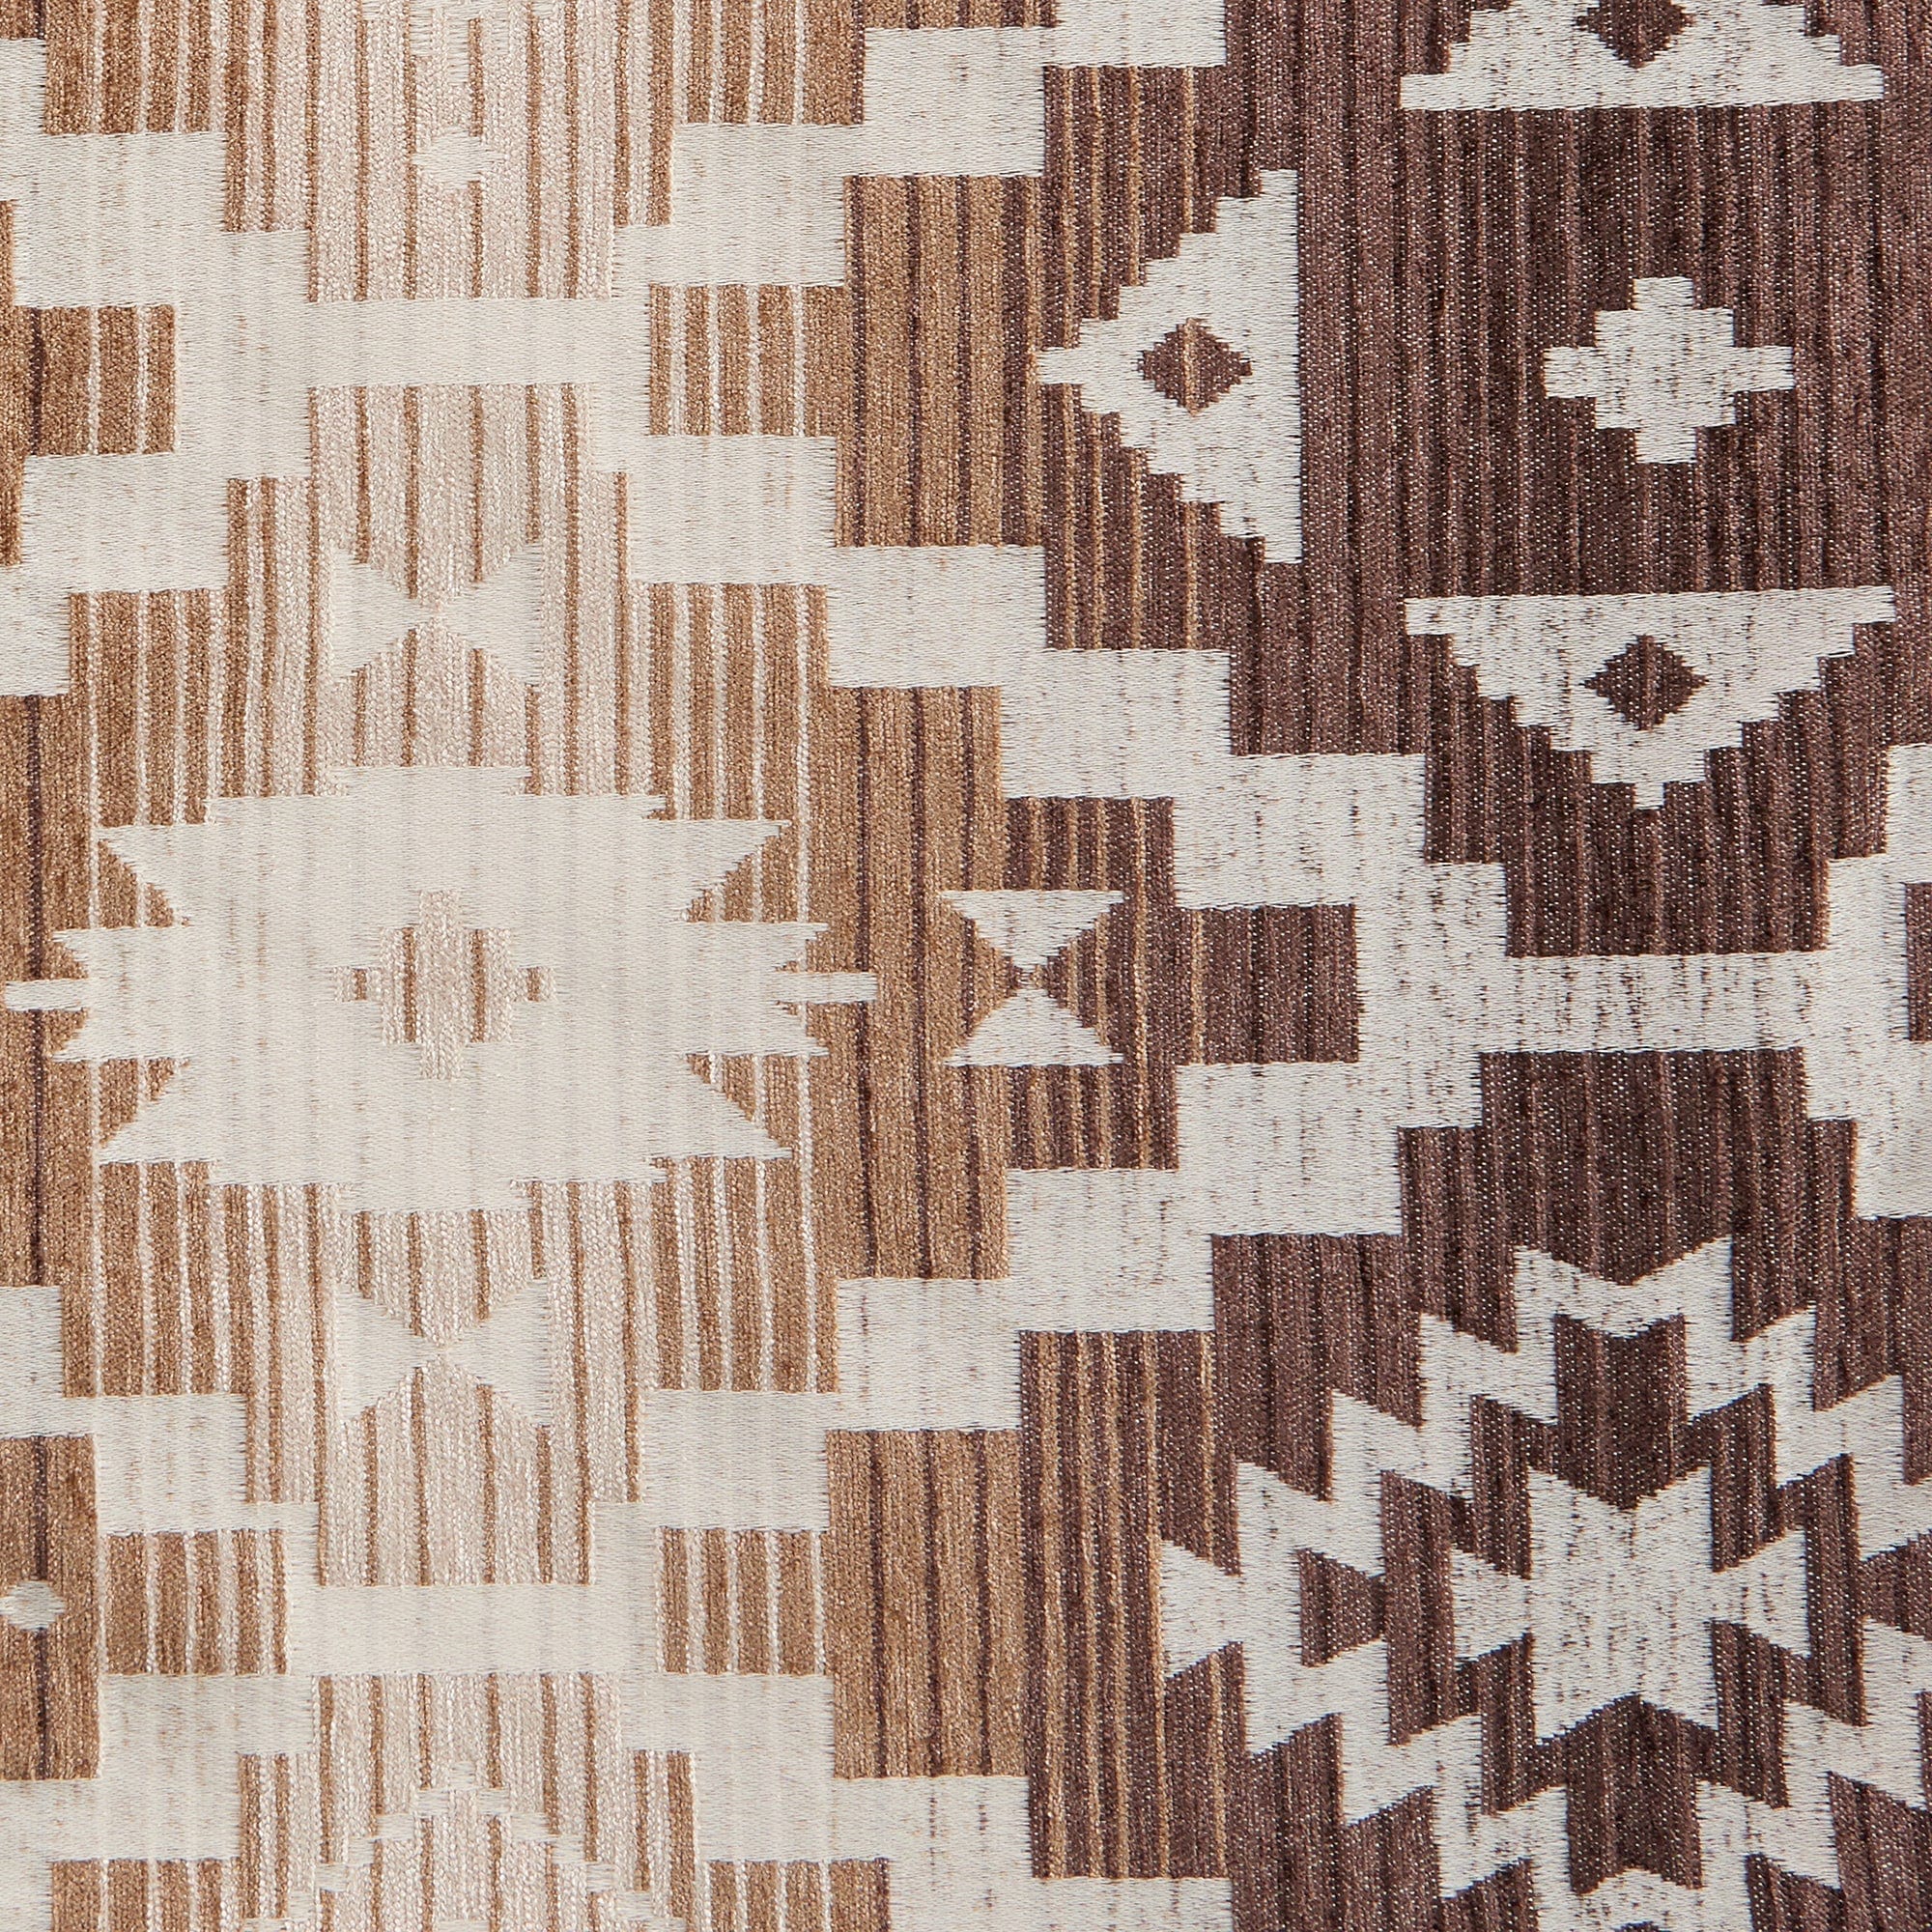 Chalet Aztec Bedding Set Comforter / Duvet Cover